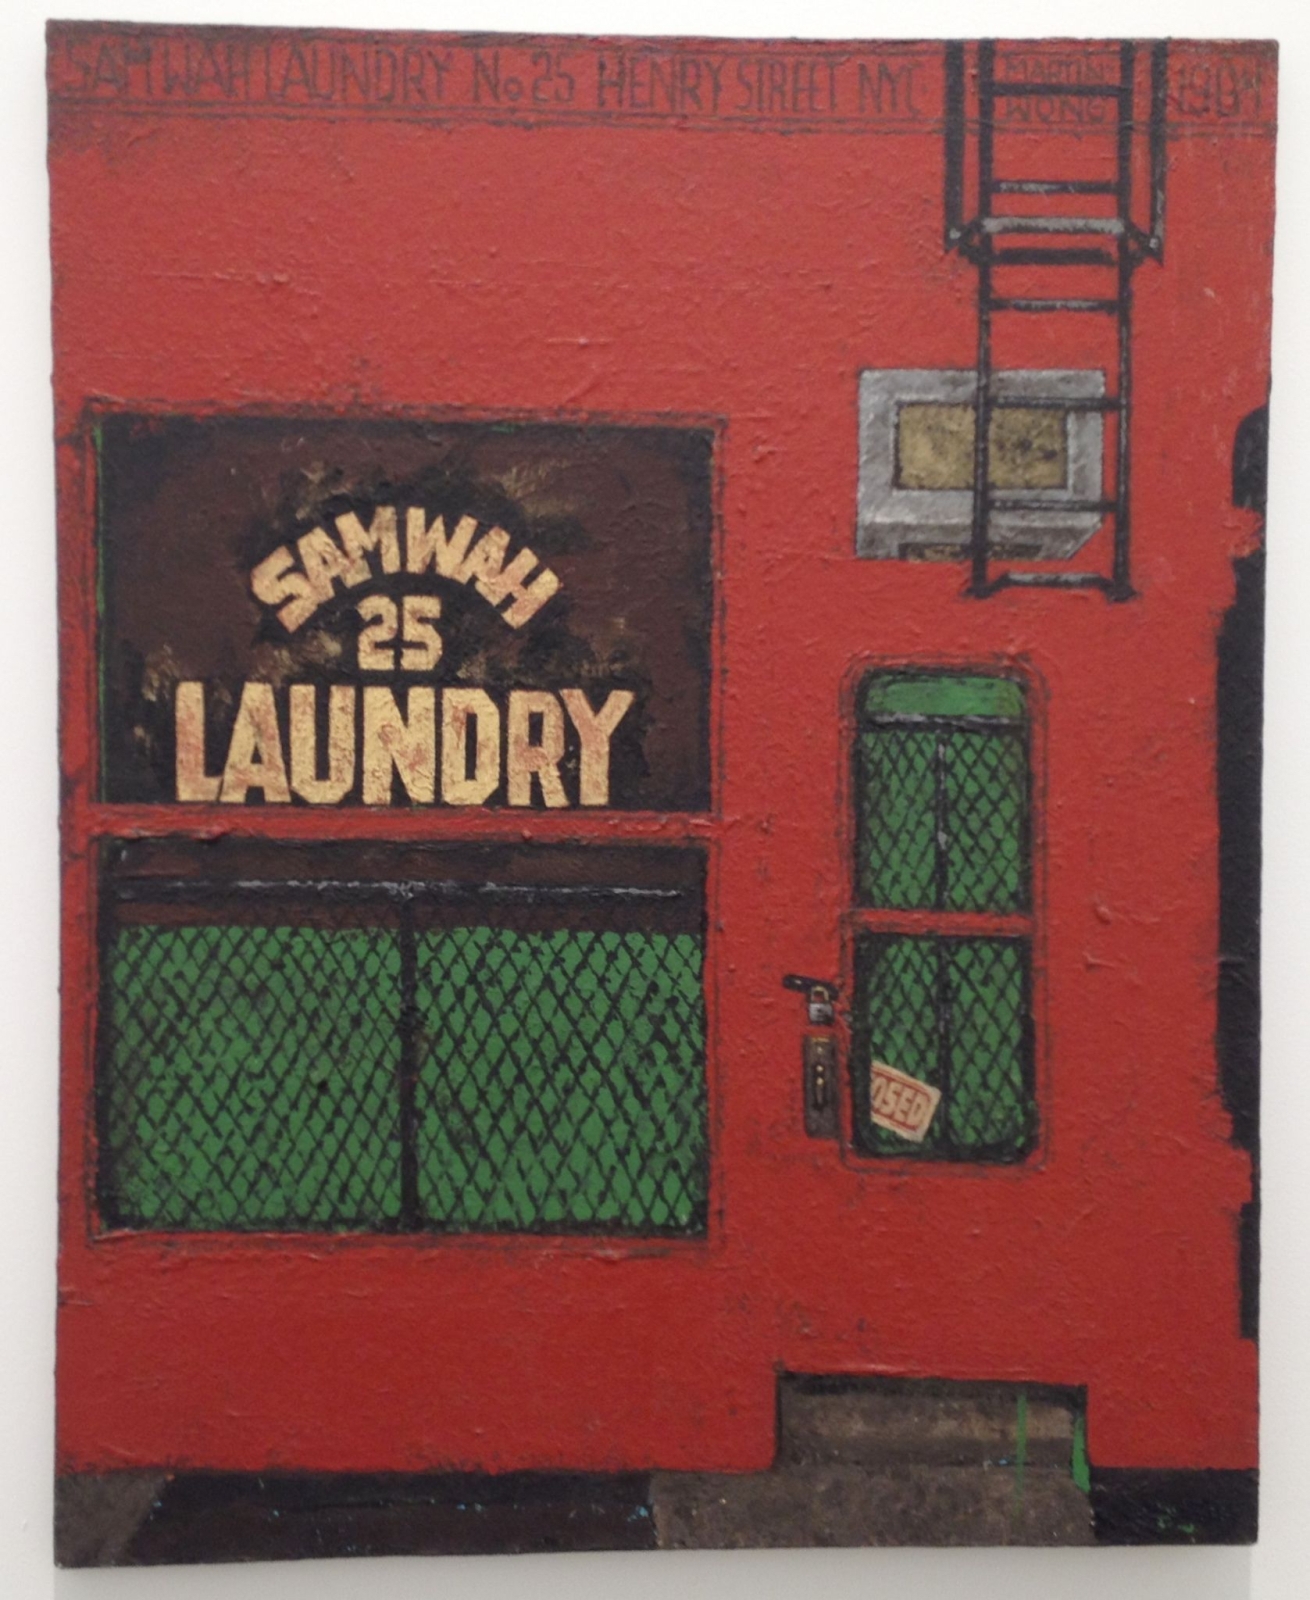 Martin Wong
Sam Wah Laundry, 1984
acrylic on canvas
36 x 24 in.
91.44 x 60.96 cm